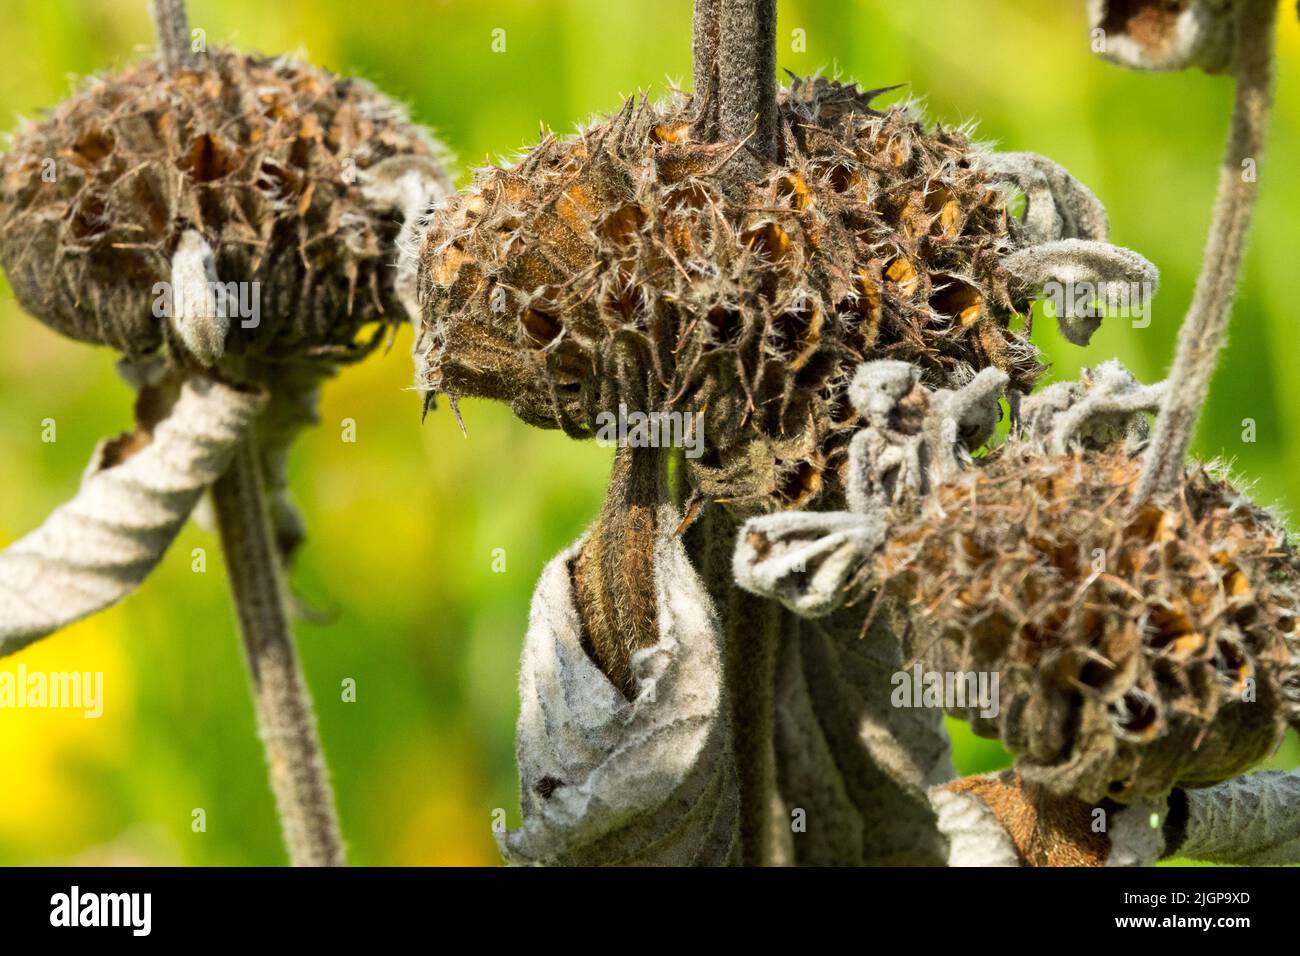 Phlomis russeliana seedheads dried flower heads Stock Photo